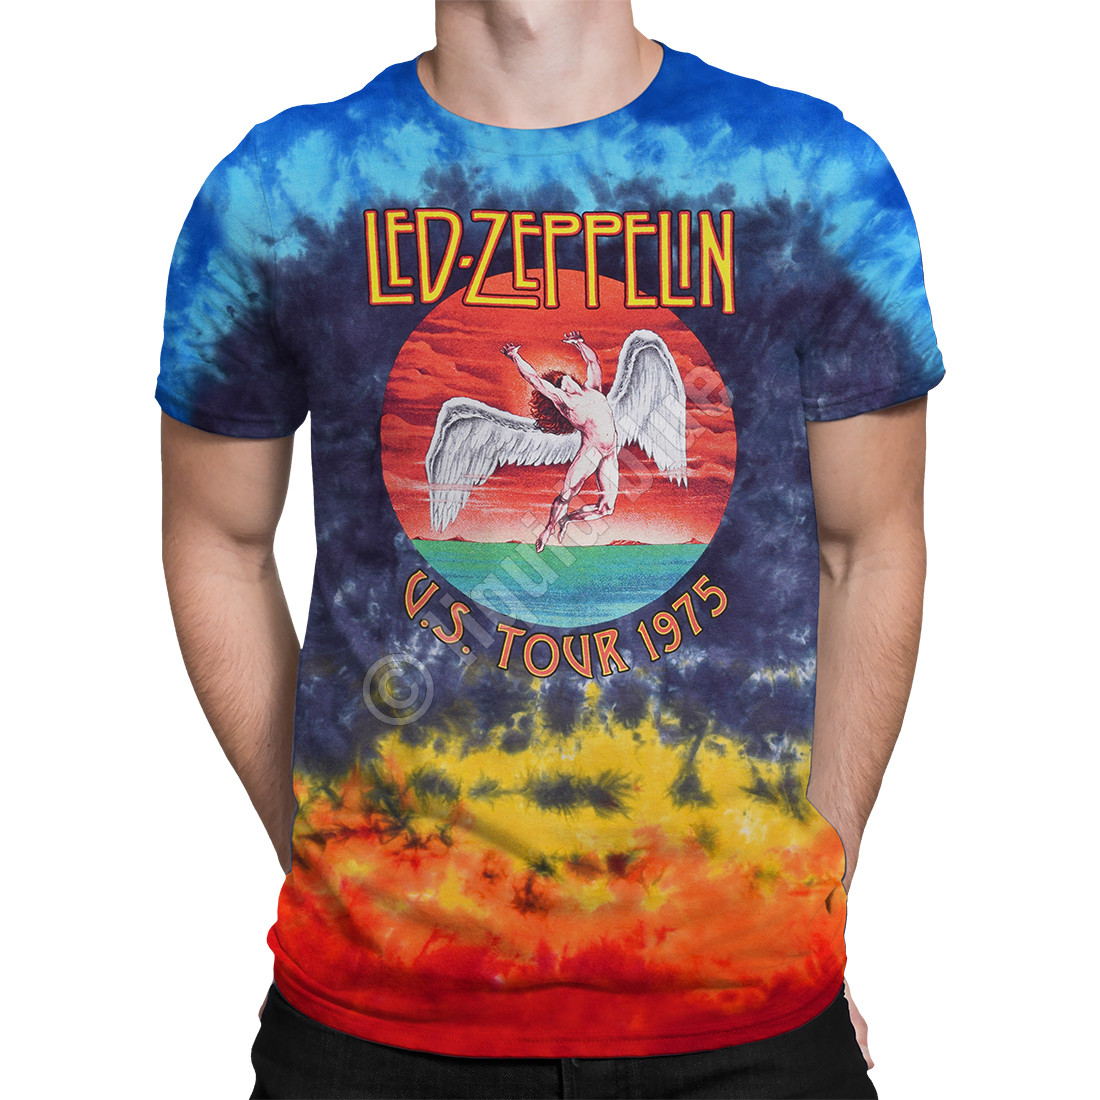 led zeplin shirts